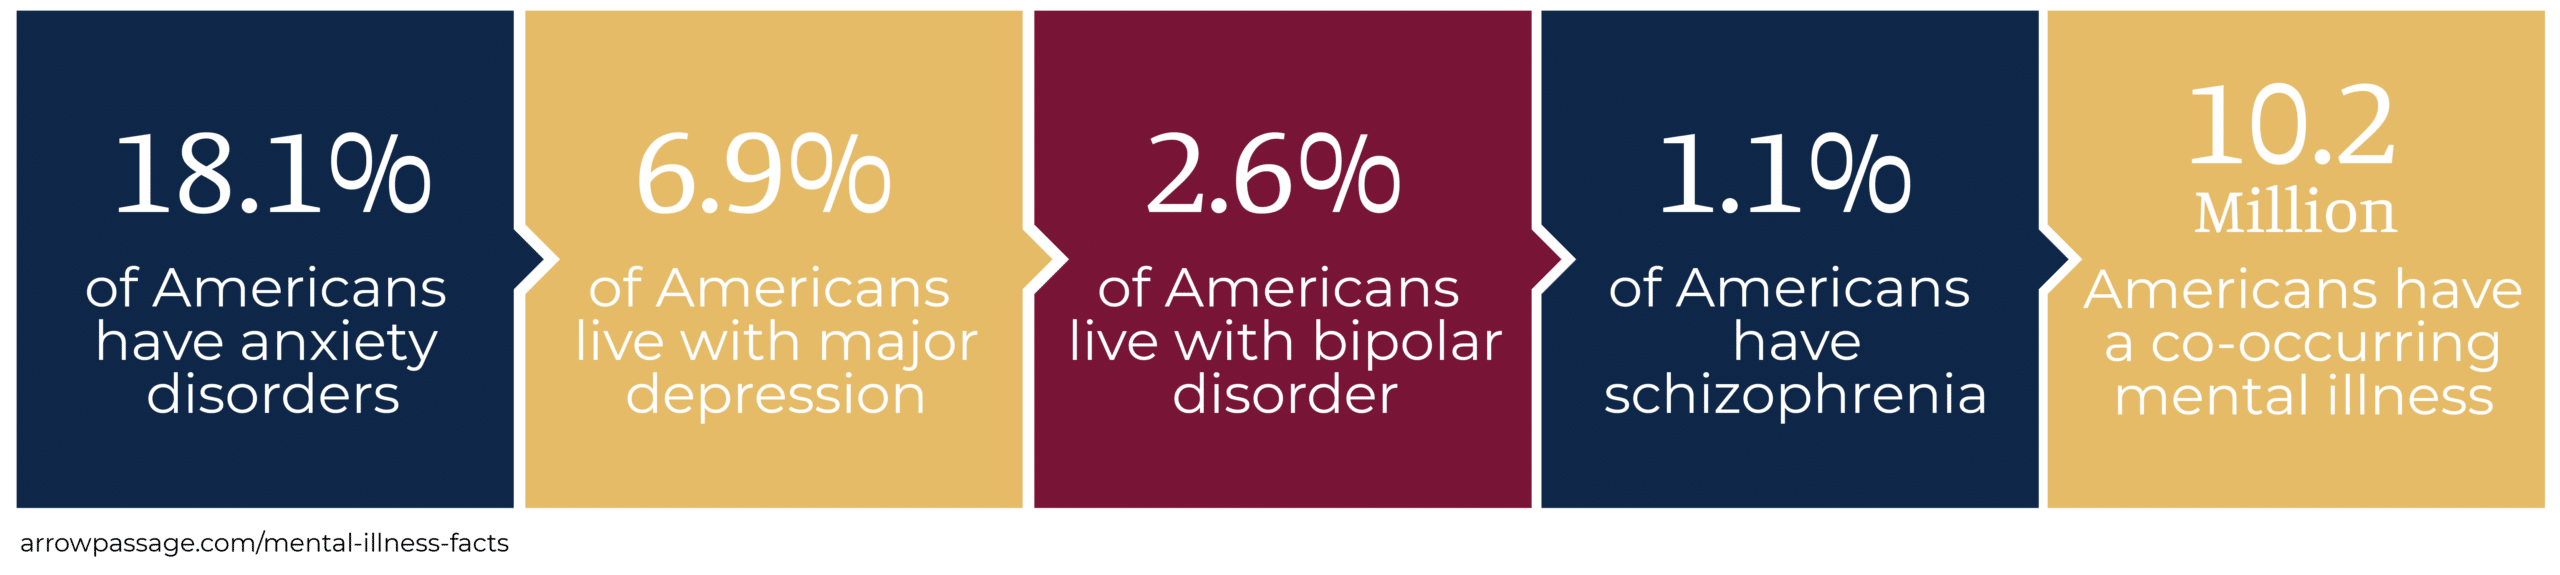 rockstar drink impact on bipolar disorder